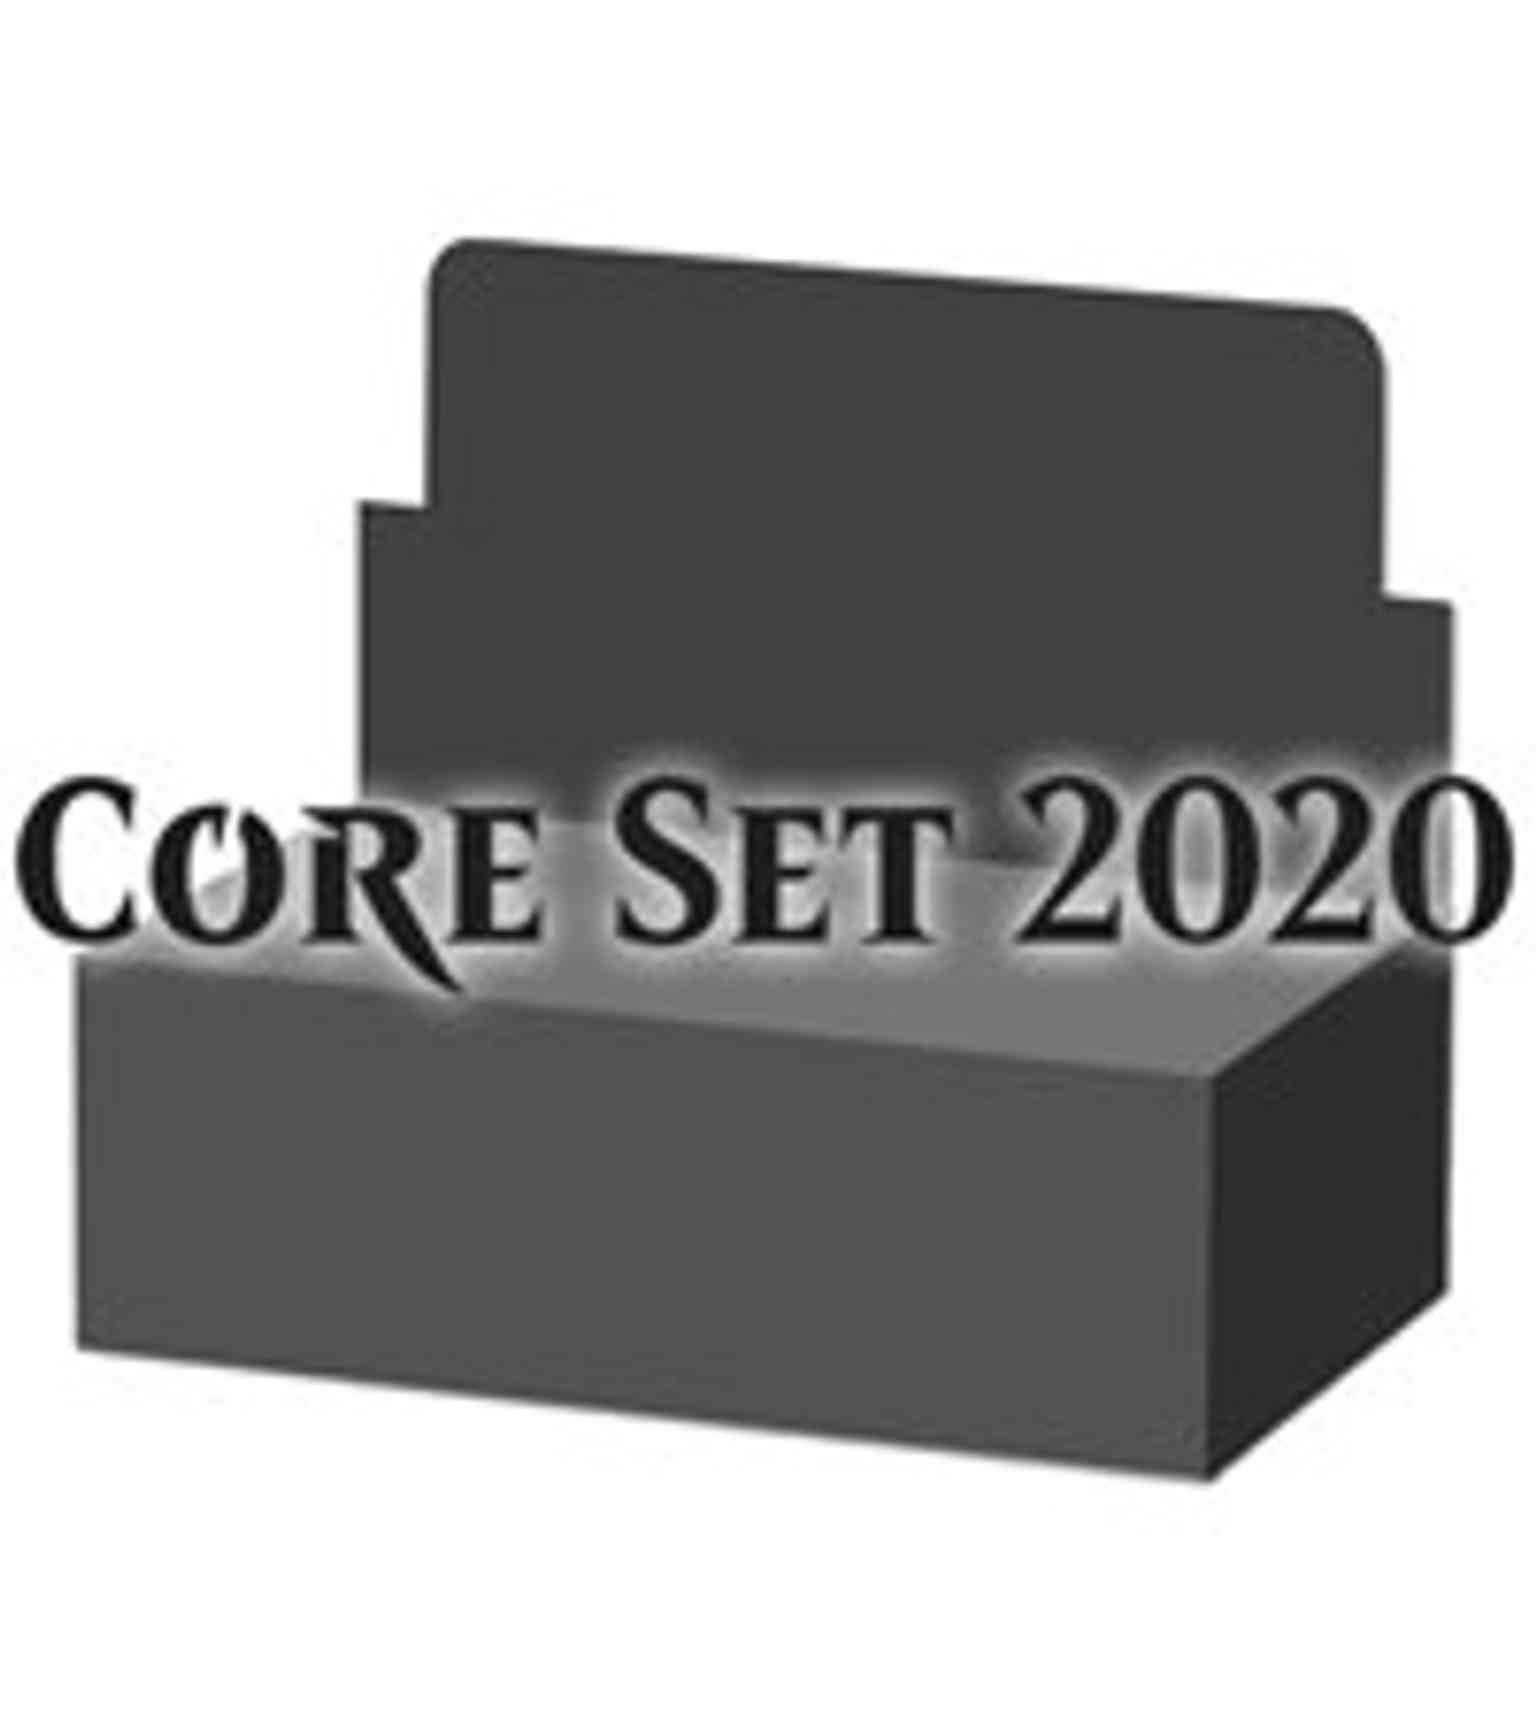 Core Set 2020 - Booster Box magic card front